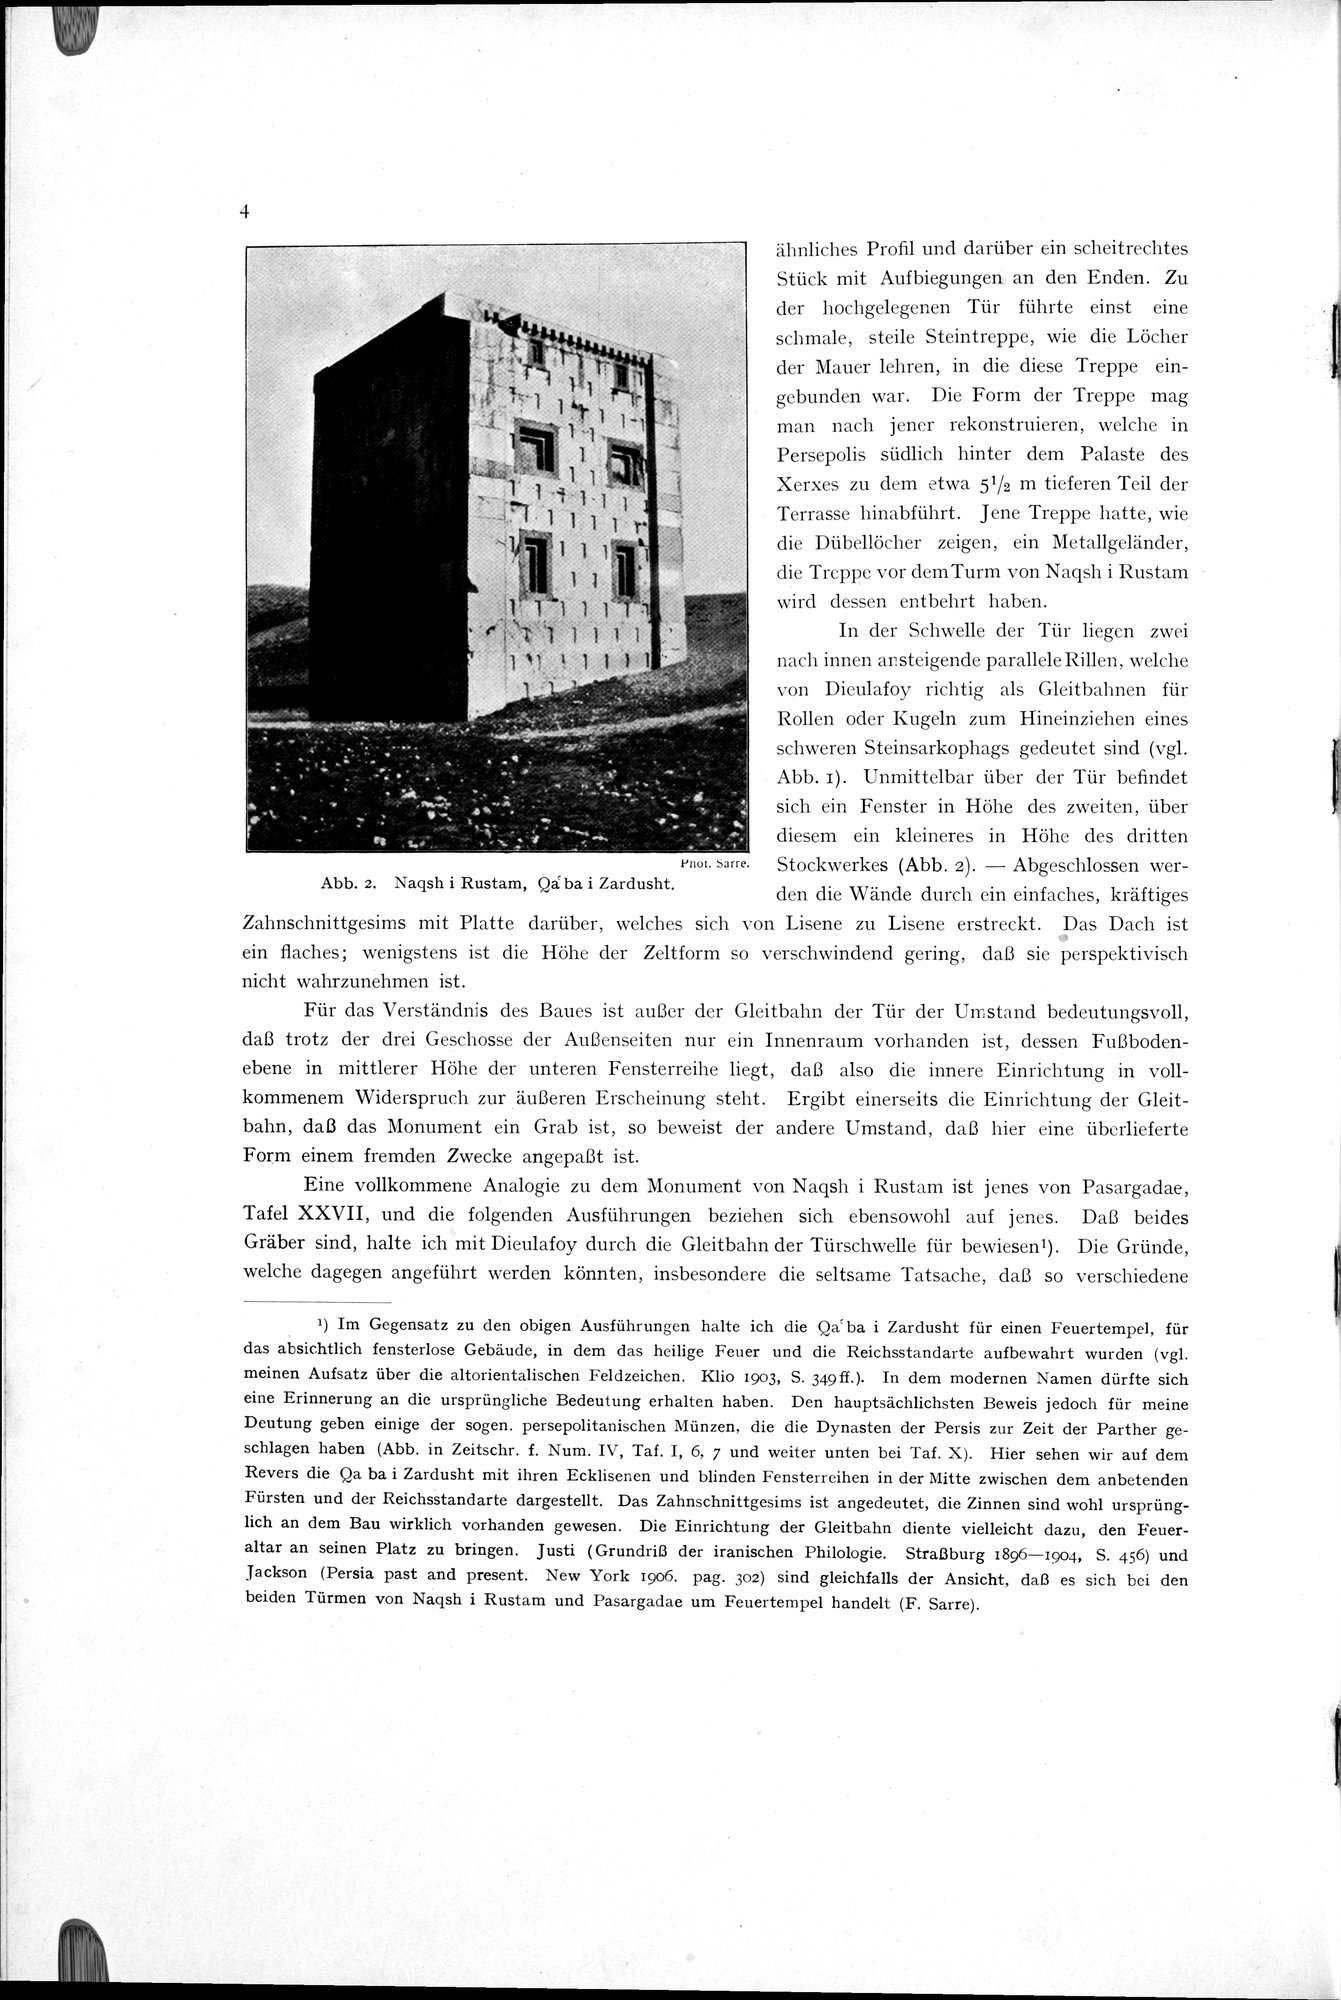 Iranische Felsreliefs : vol.1 / Page 16 (Grayscale High Resolution Image)